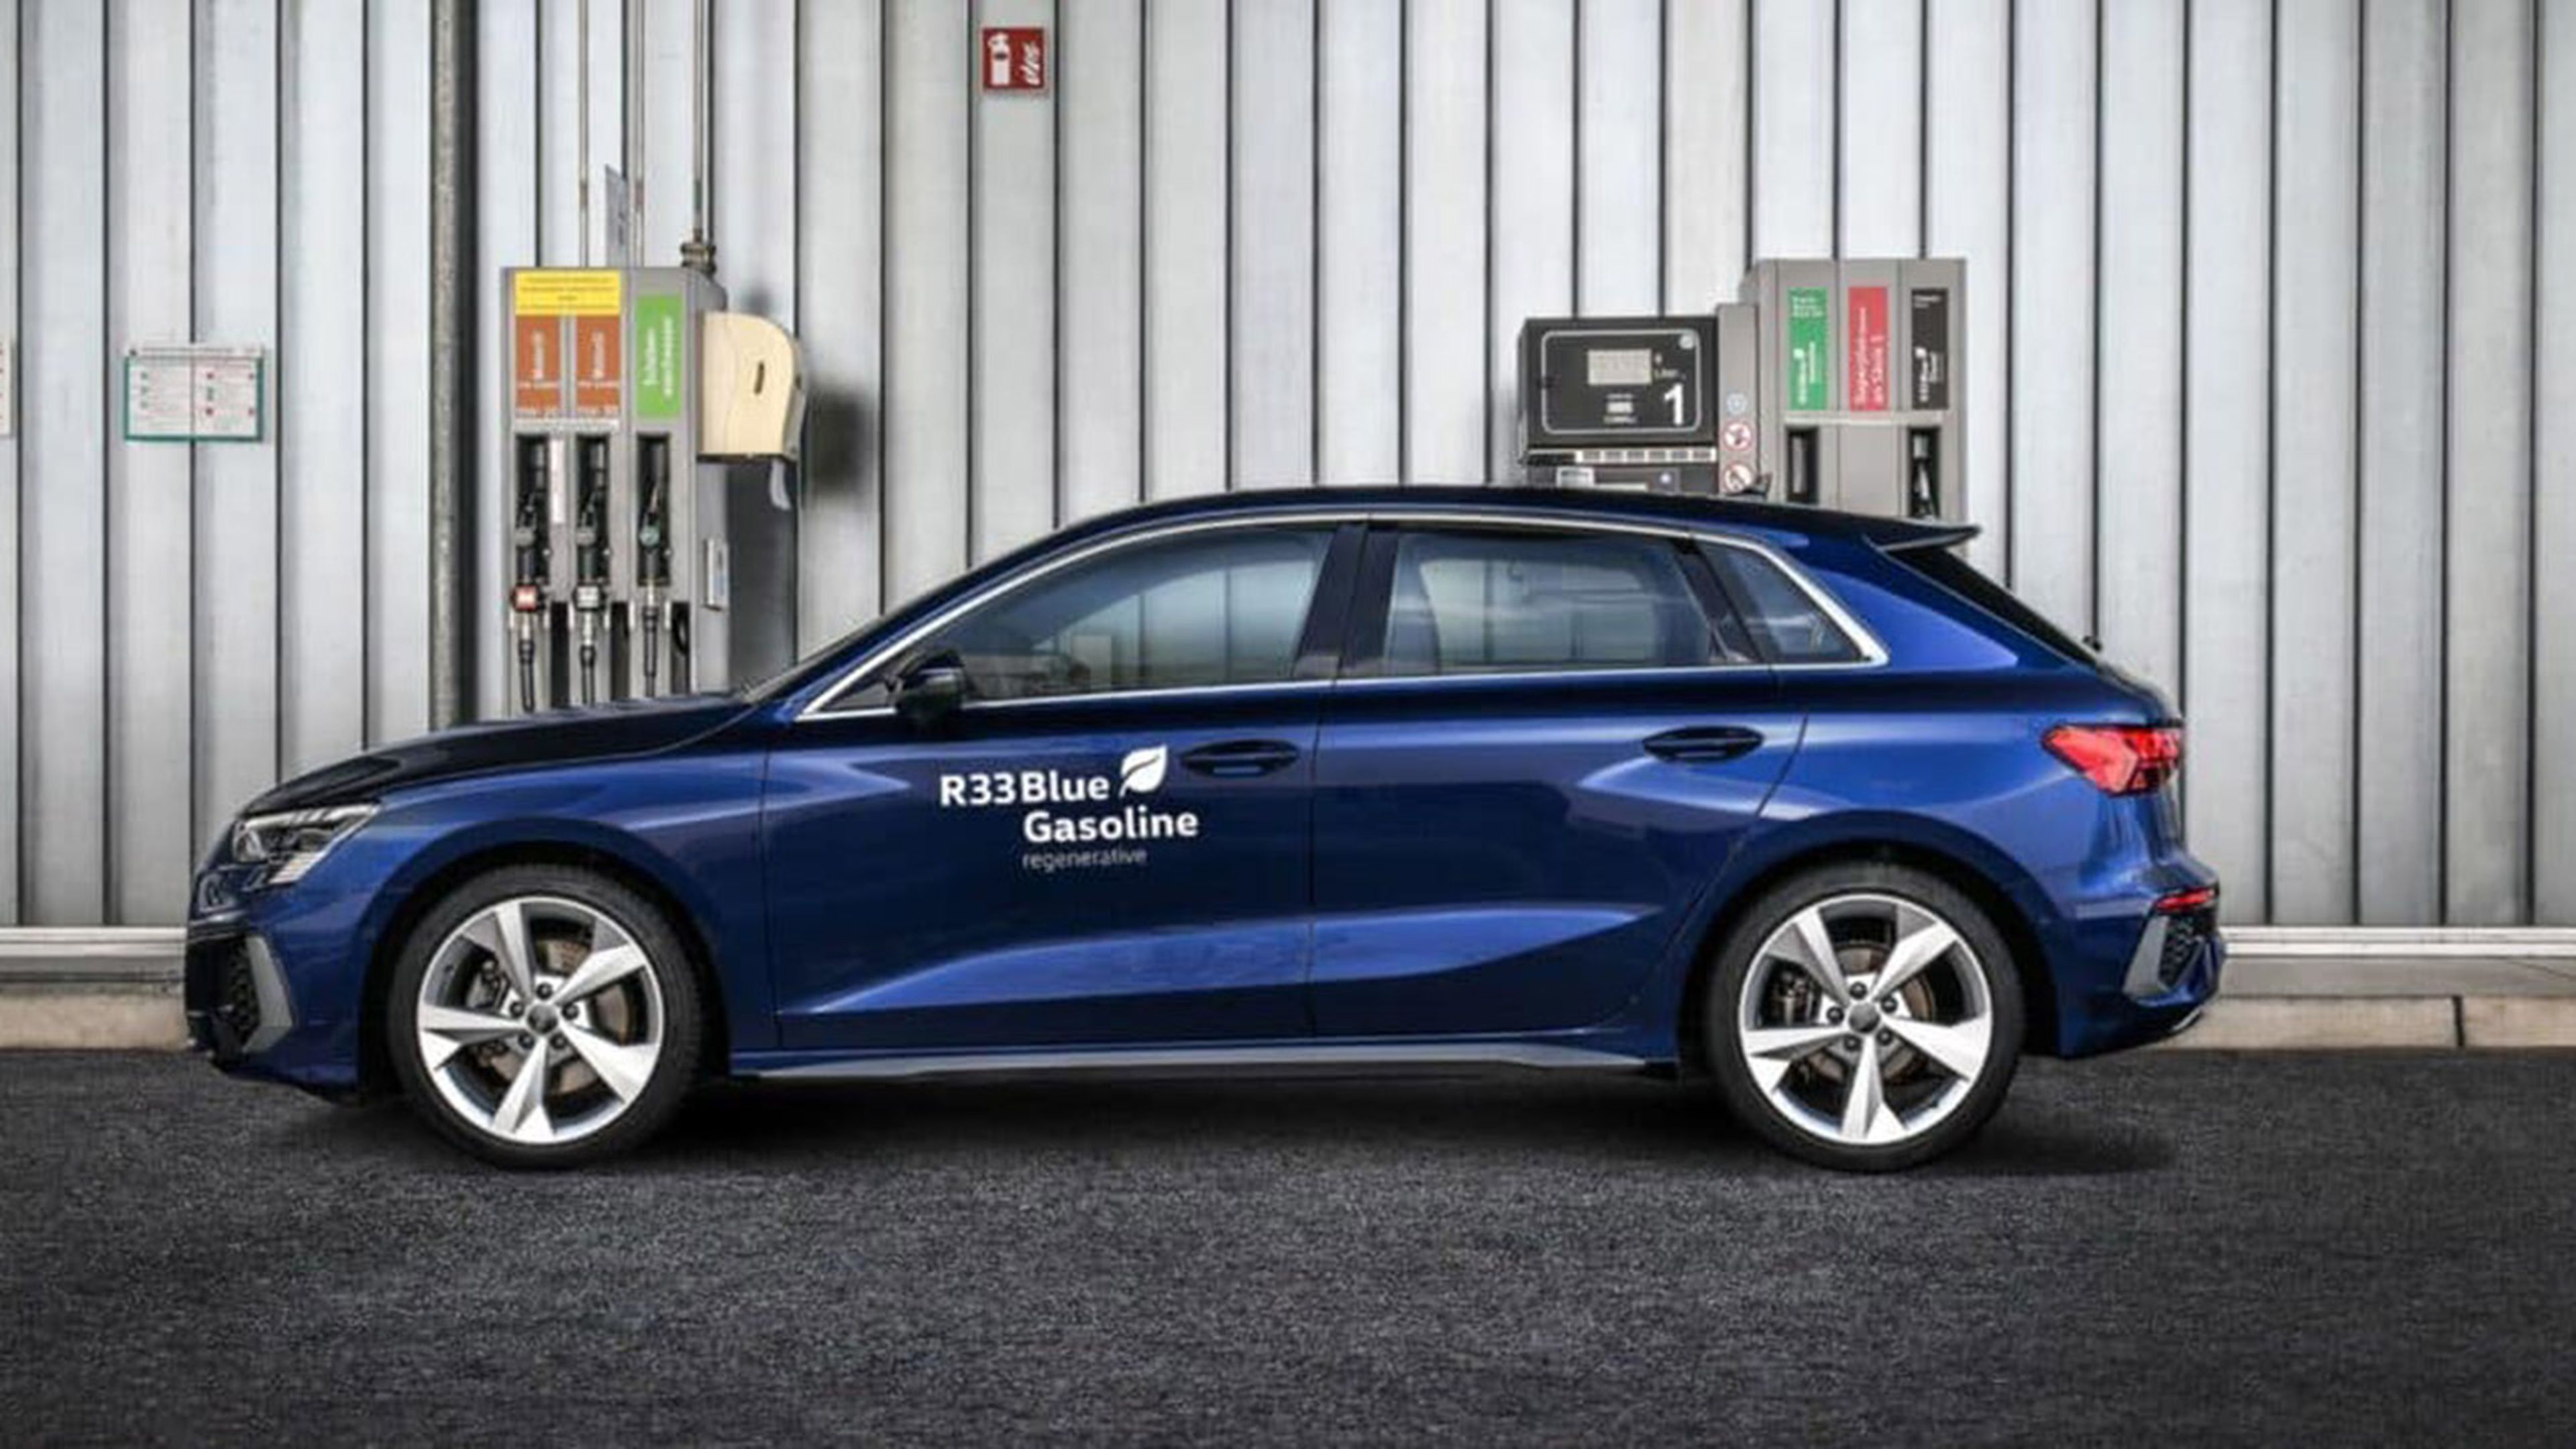 Audi R33 Blue Gasoline